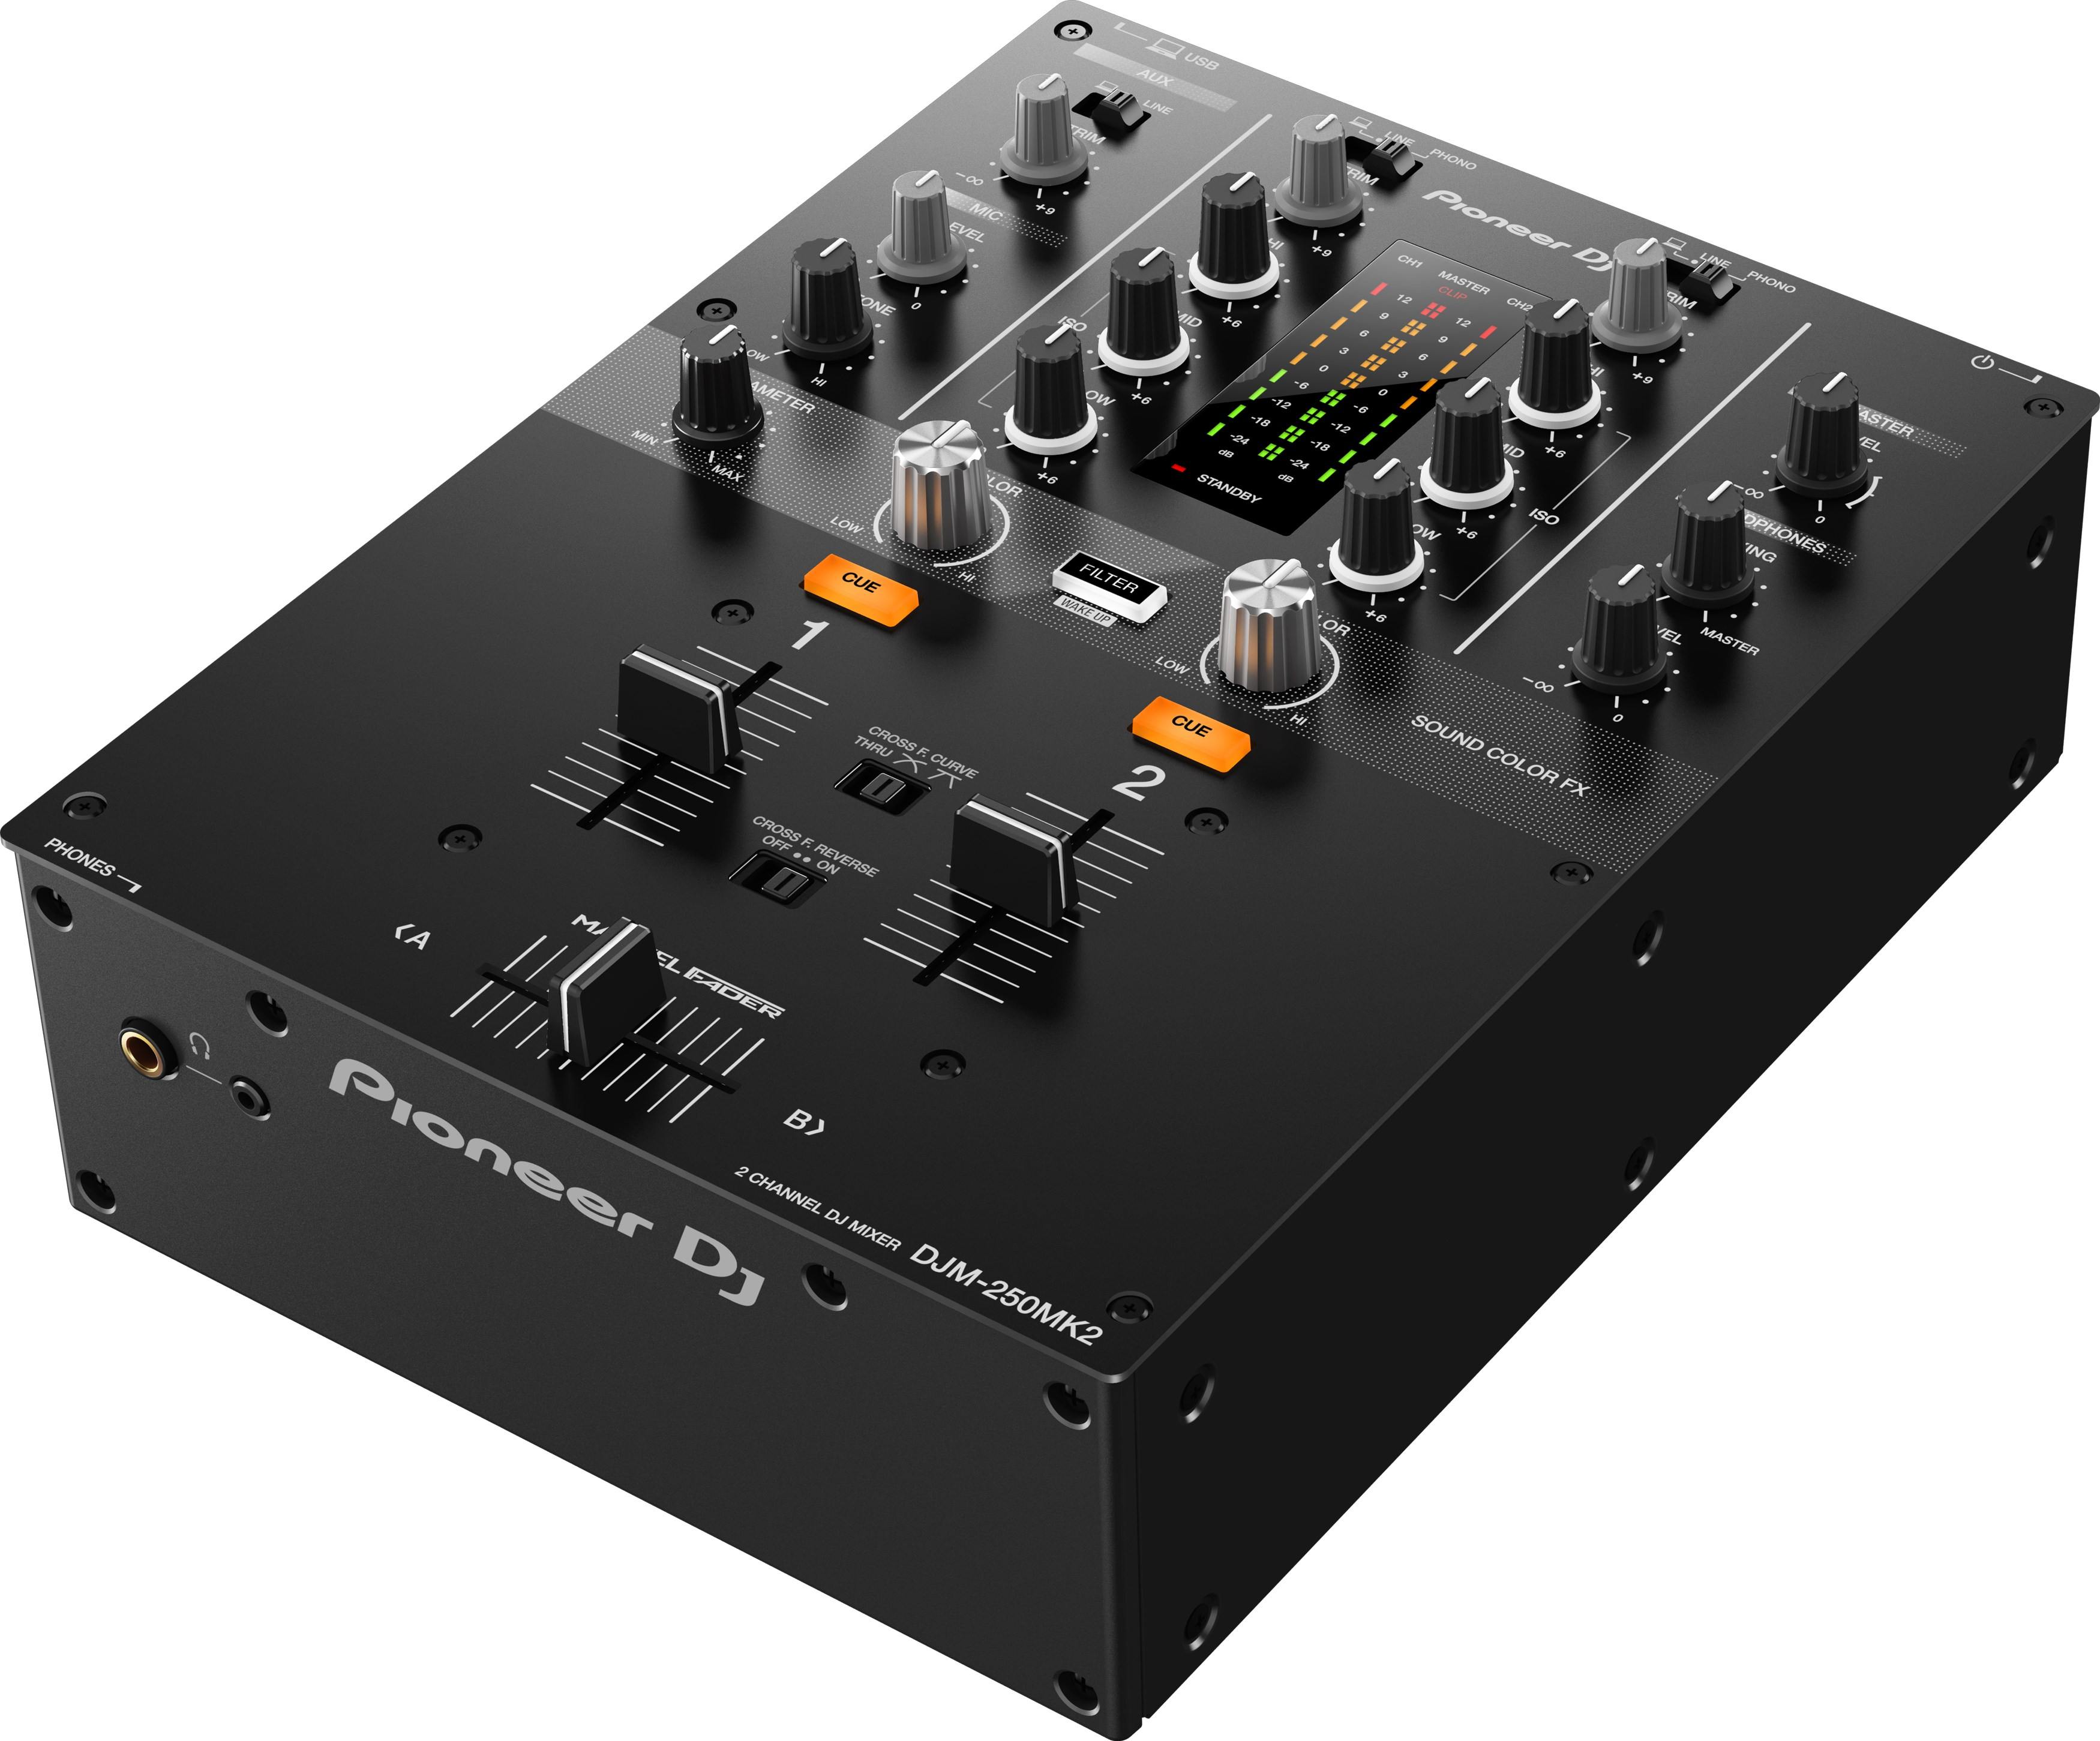 Mixer　DJM-250Mk2　Pioneer　DJ　2-Channel　Rekordbox　DVS-Ready